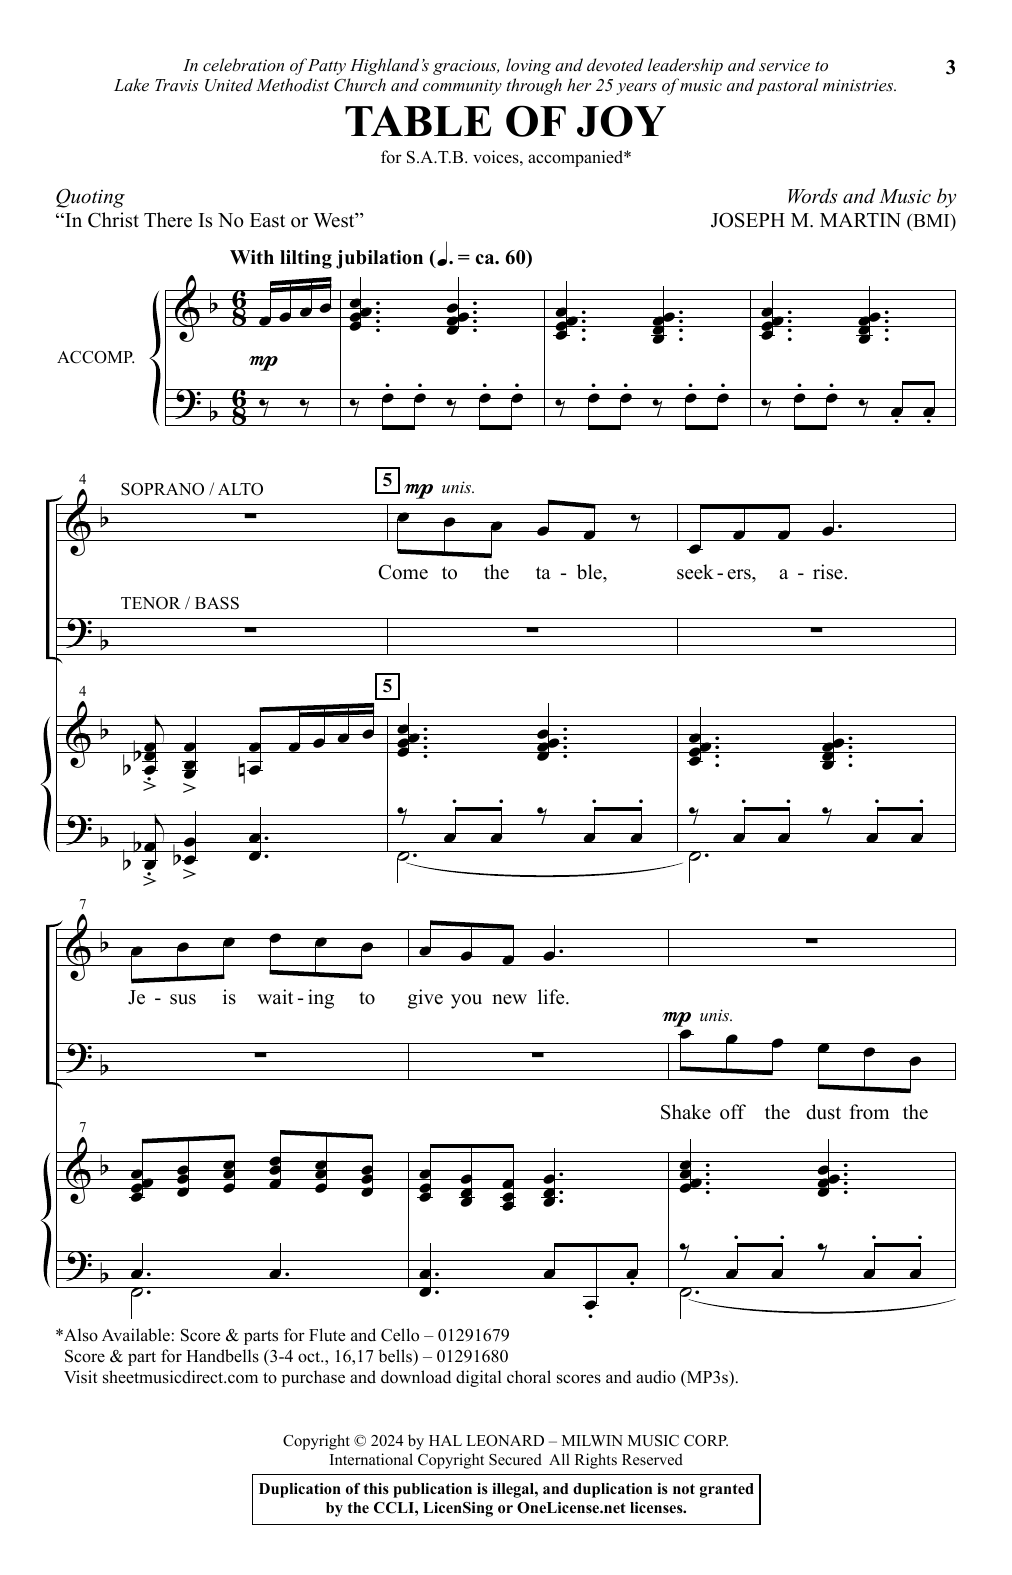 Joseph M. Martin Table Of Joy Sheet Music Notes & Chords for SATB Choir - Download or Print PDF